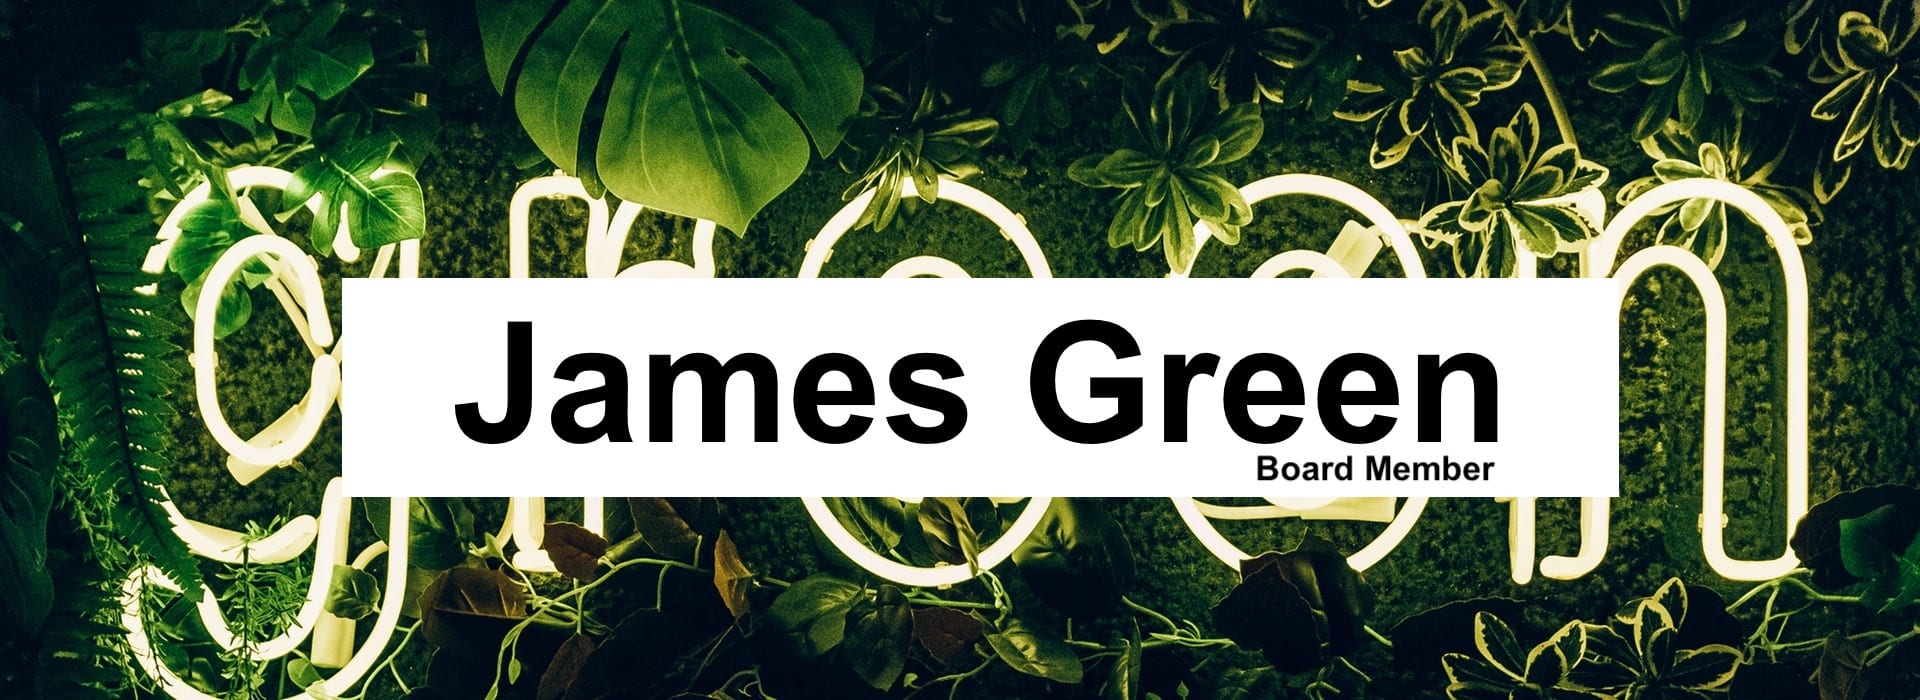 James Green Board Member graphic